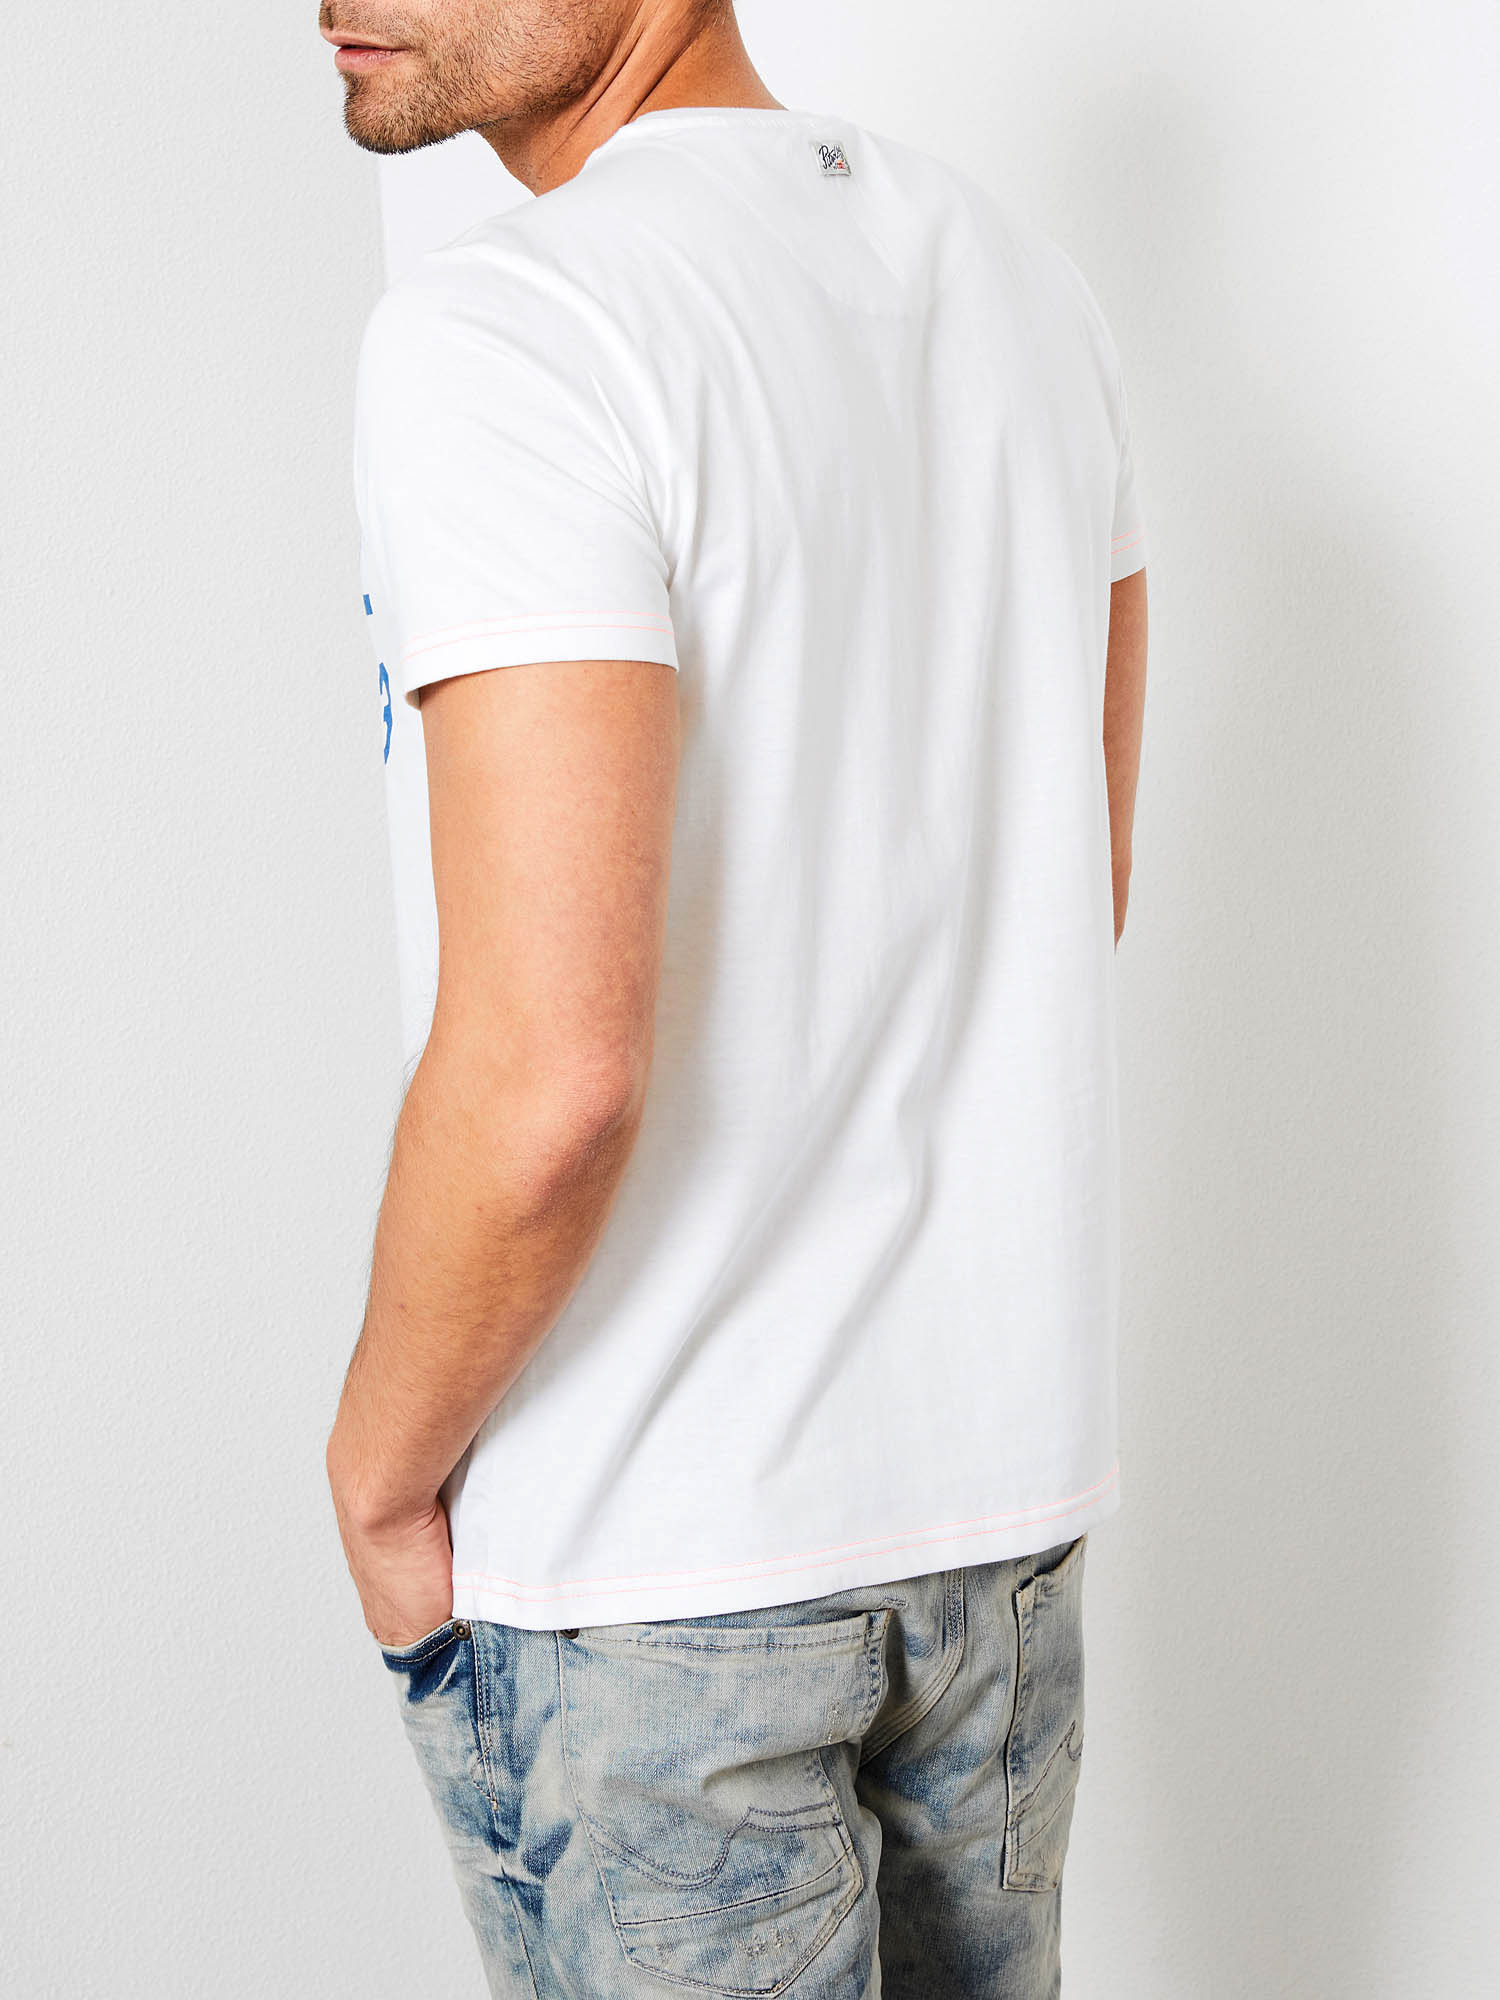 J - T-shirt Style Bright Menswear Petrol White Artwork Industries